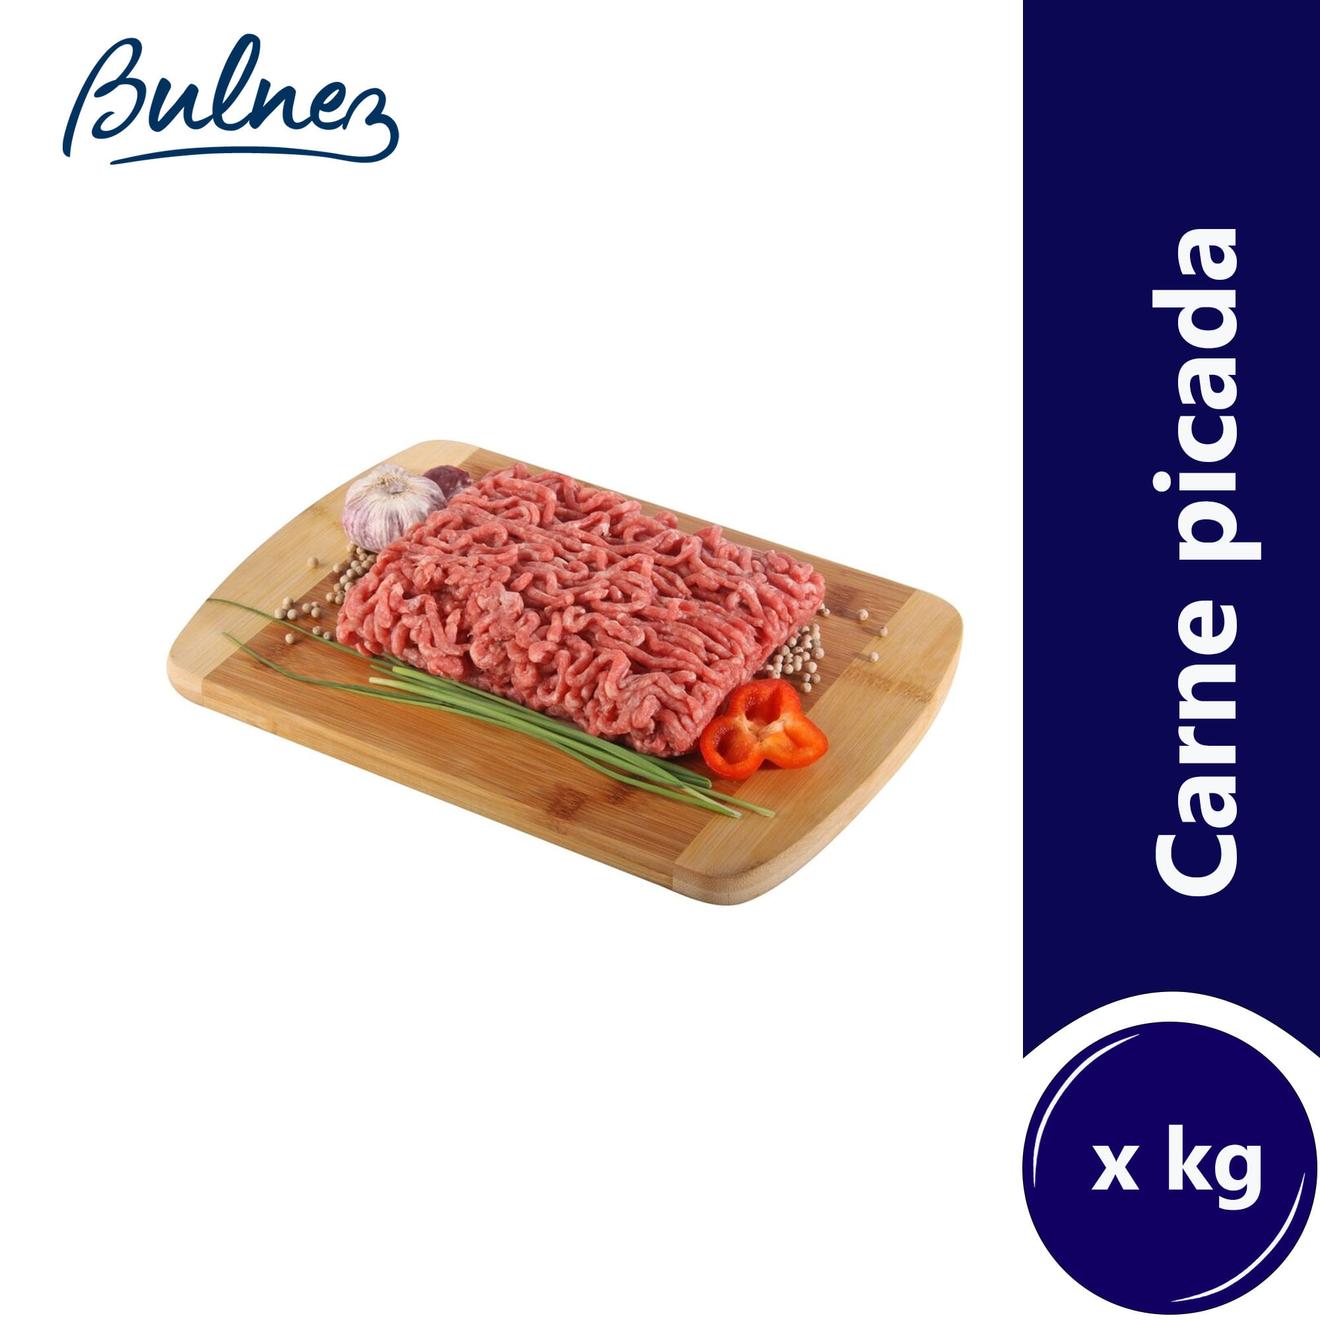 Oferta de Carne picada Bulnez x kg. por $2399 en Carrefour